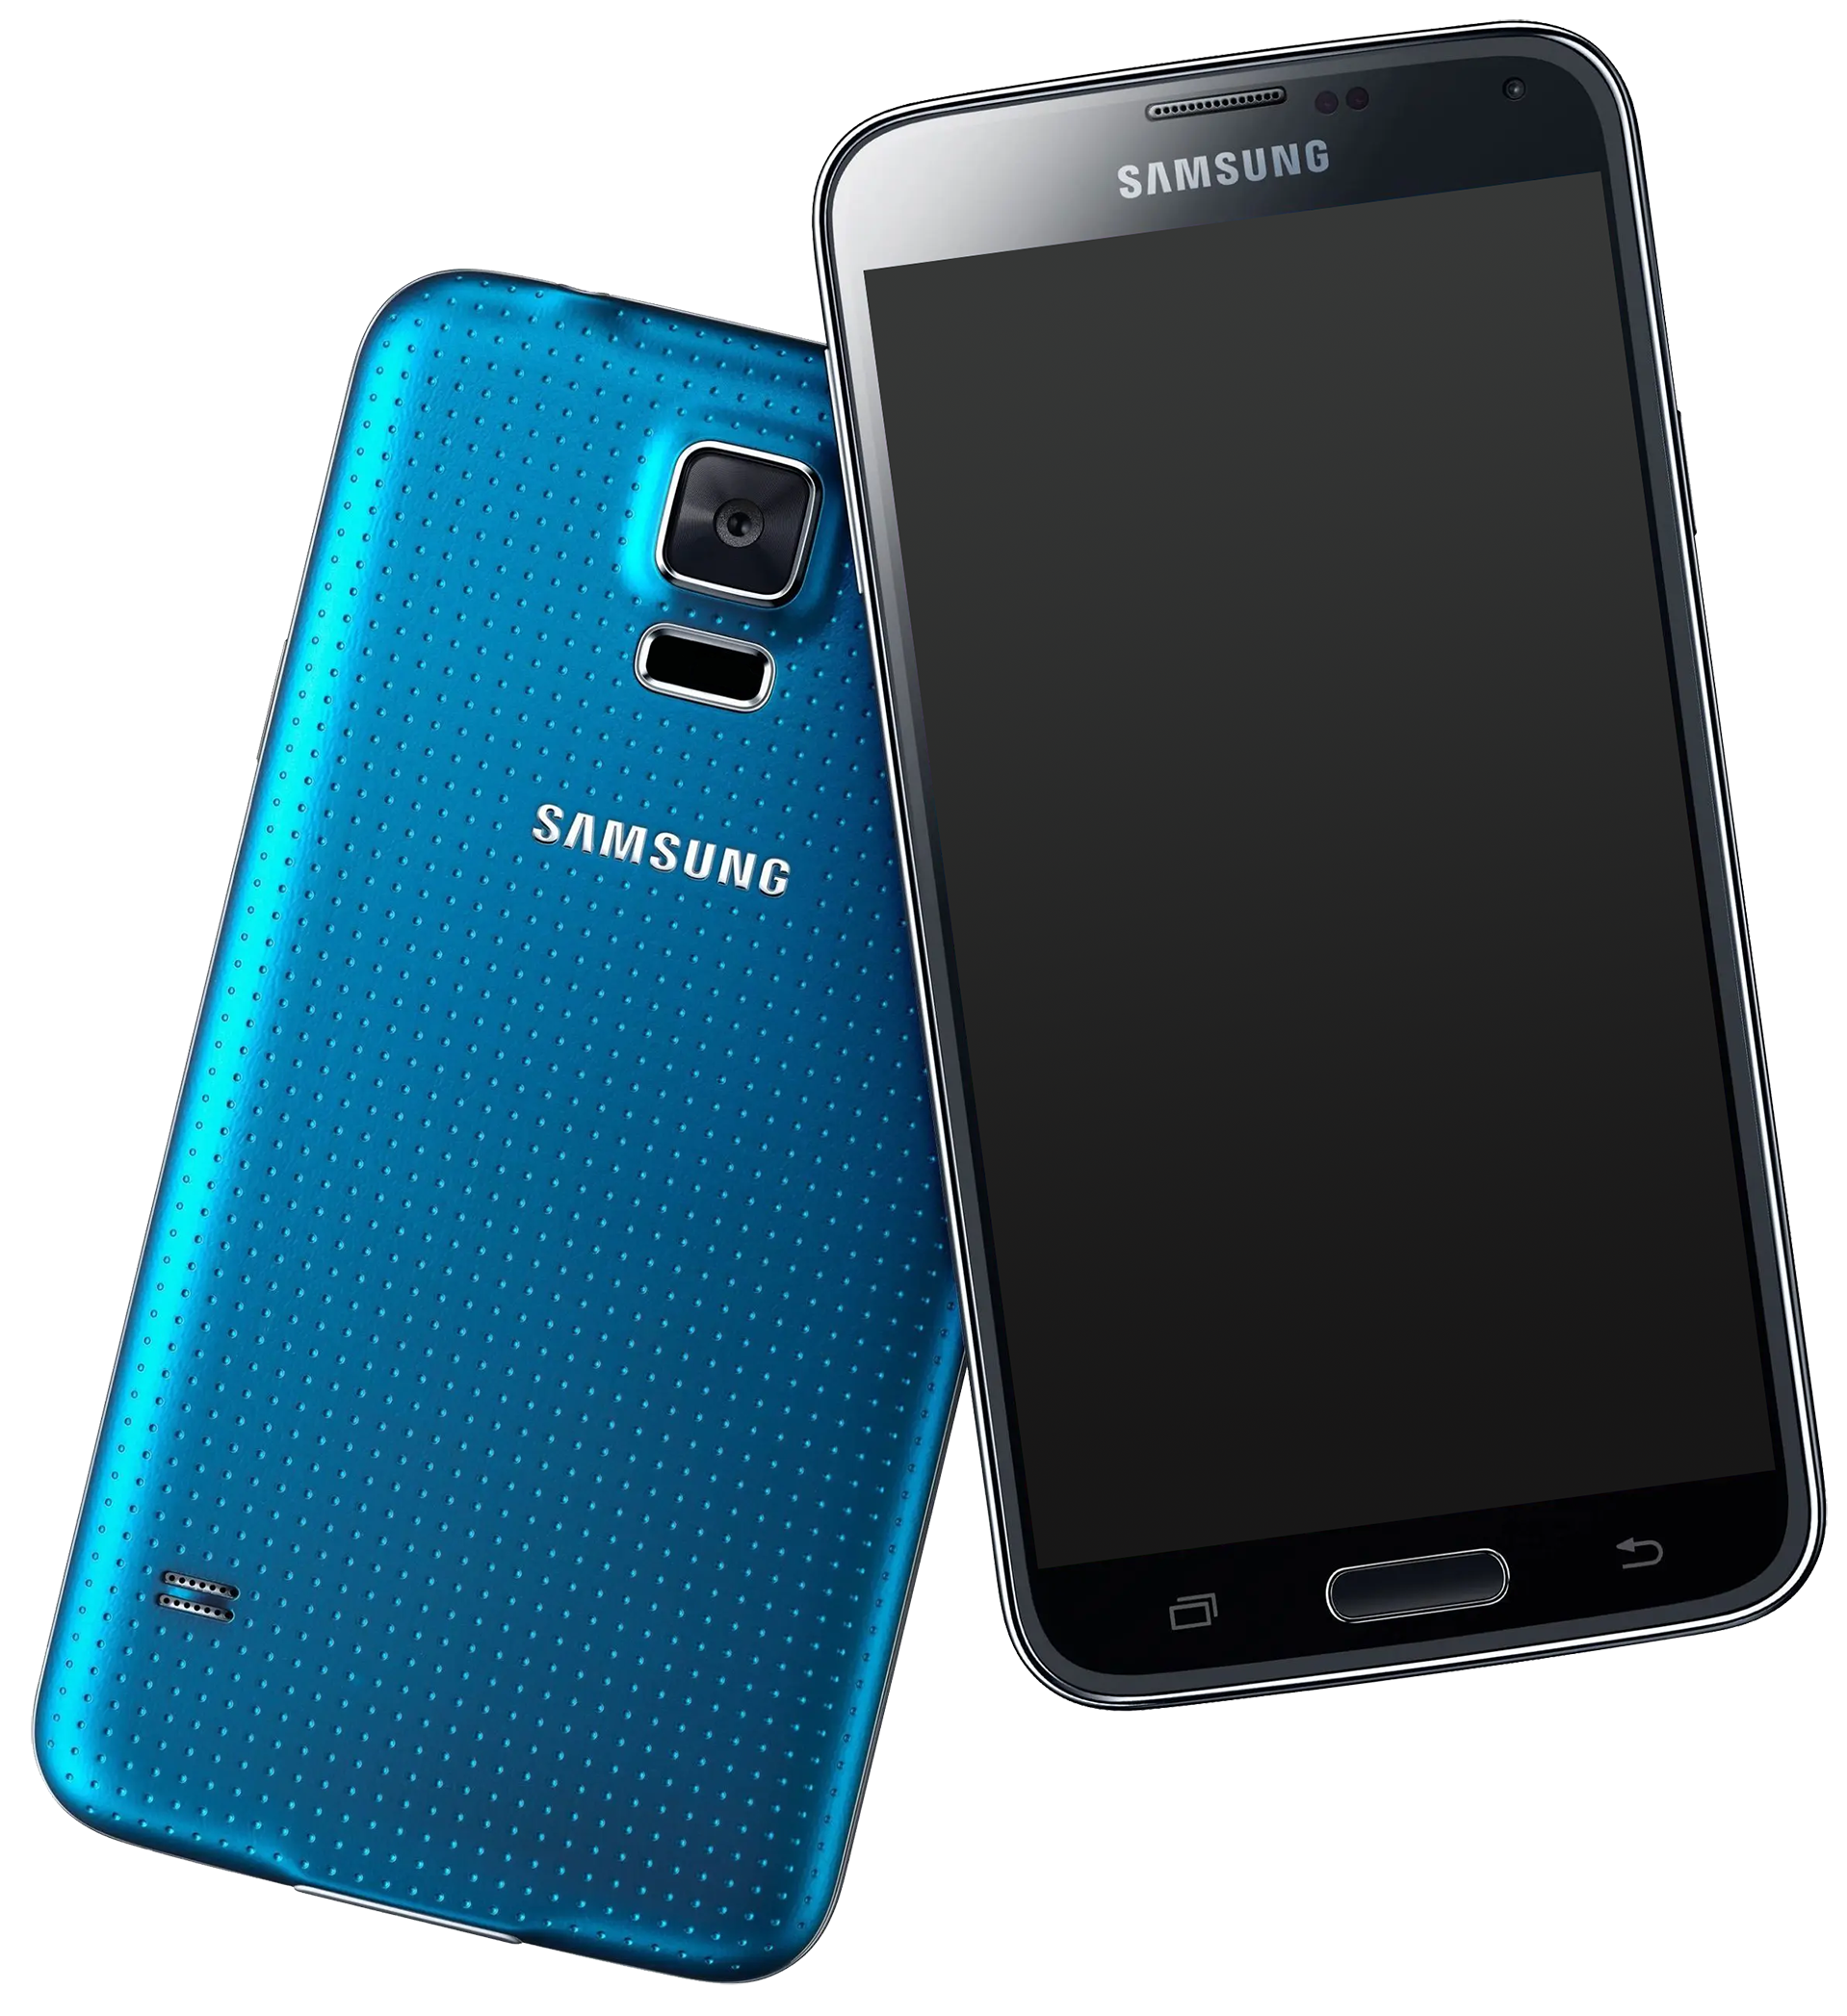 Samsung Galaxy s5 Neo blau - Onhe Vertrag